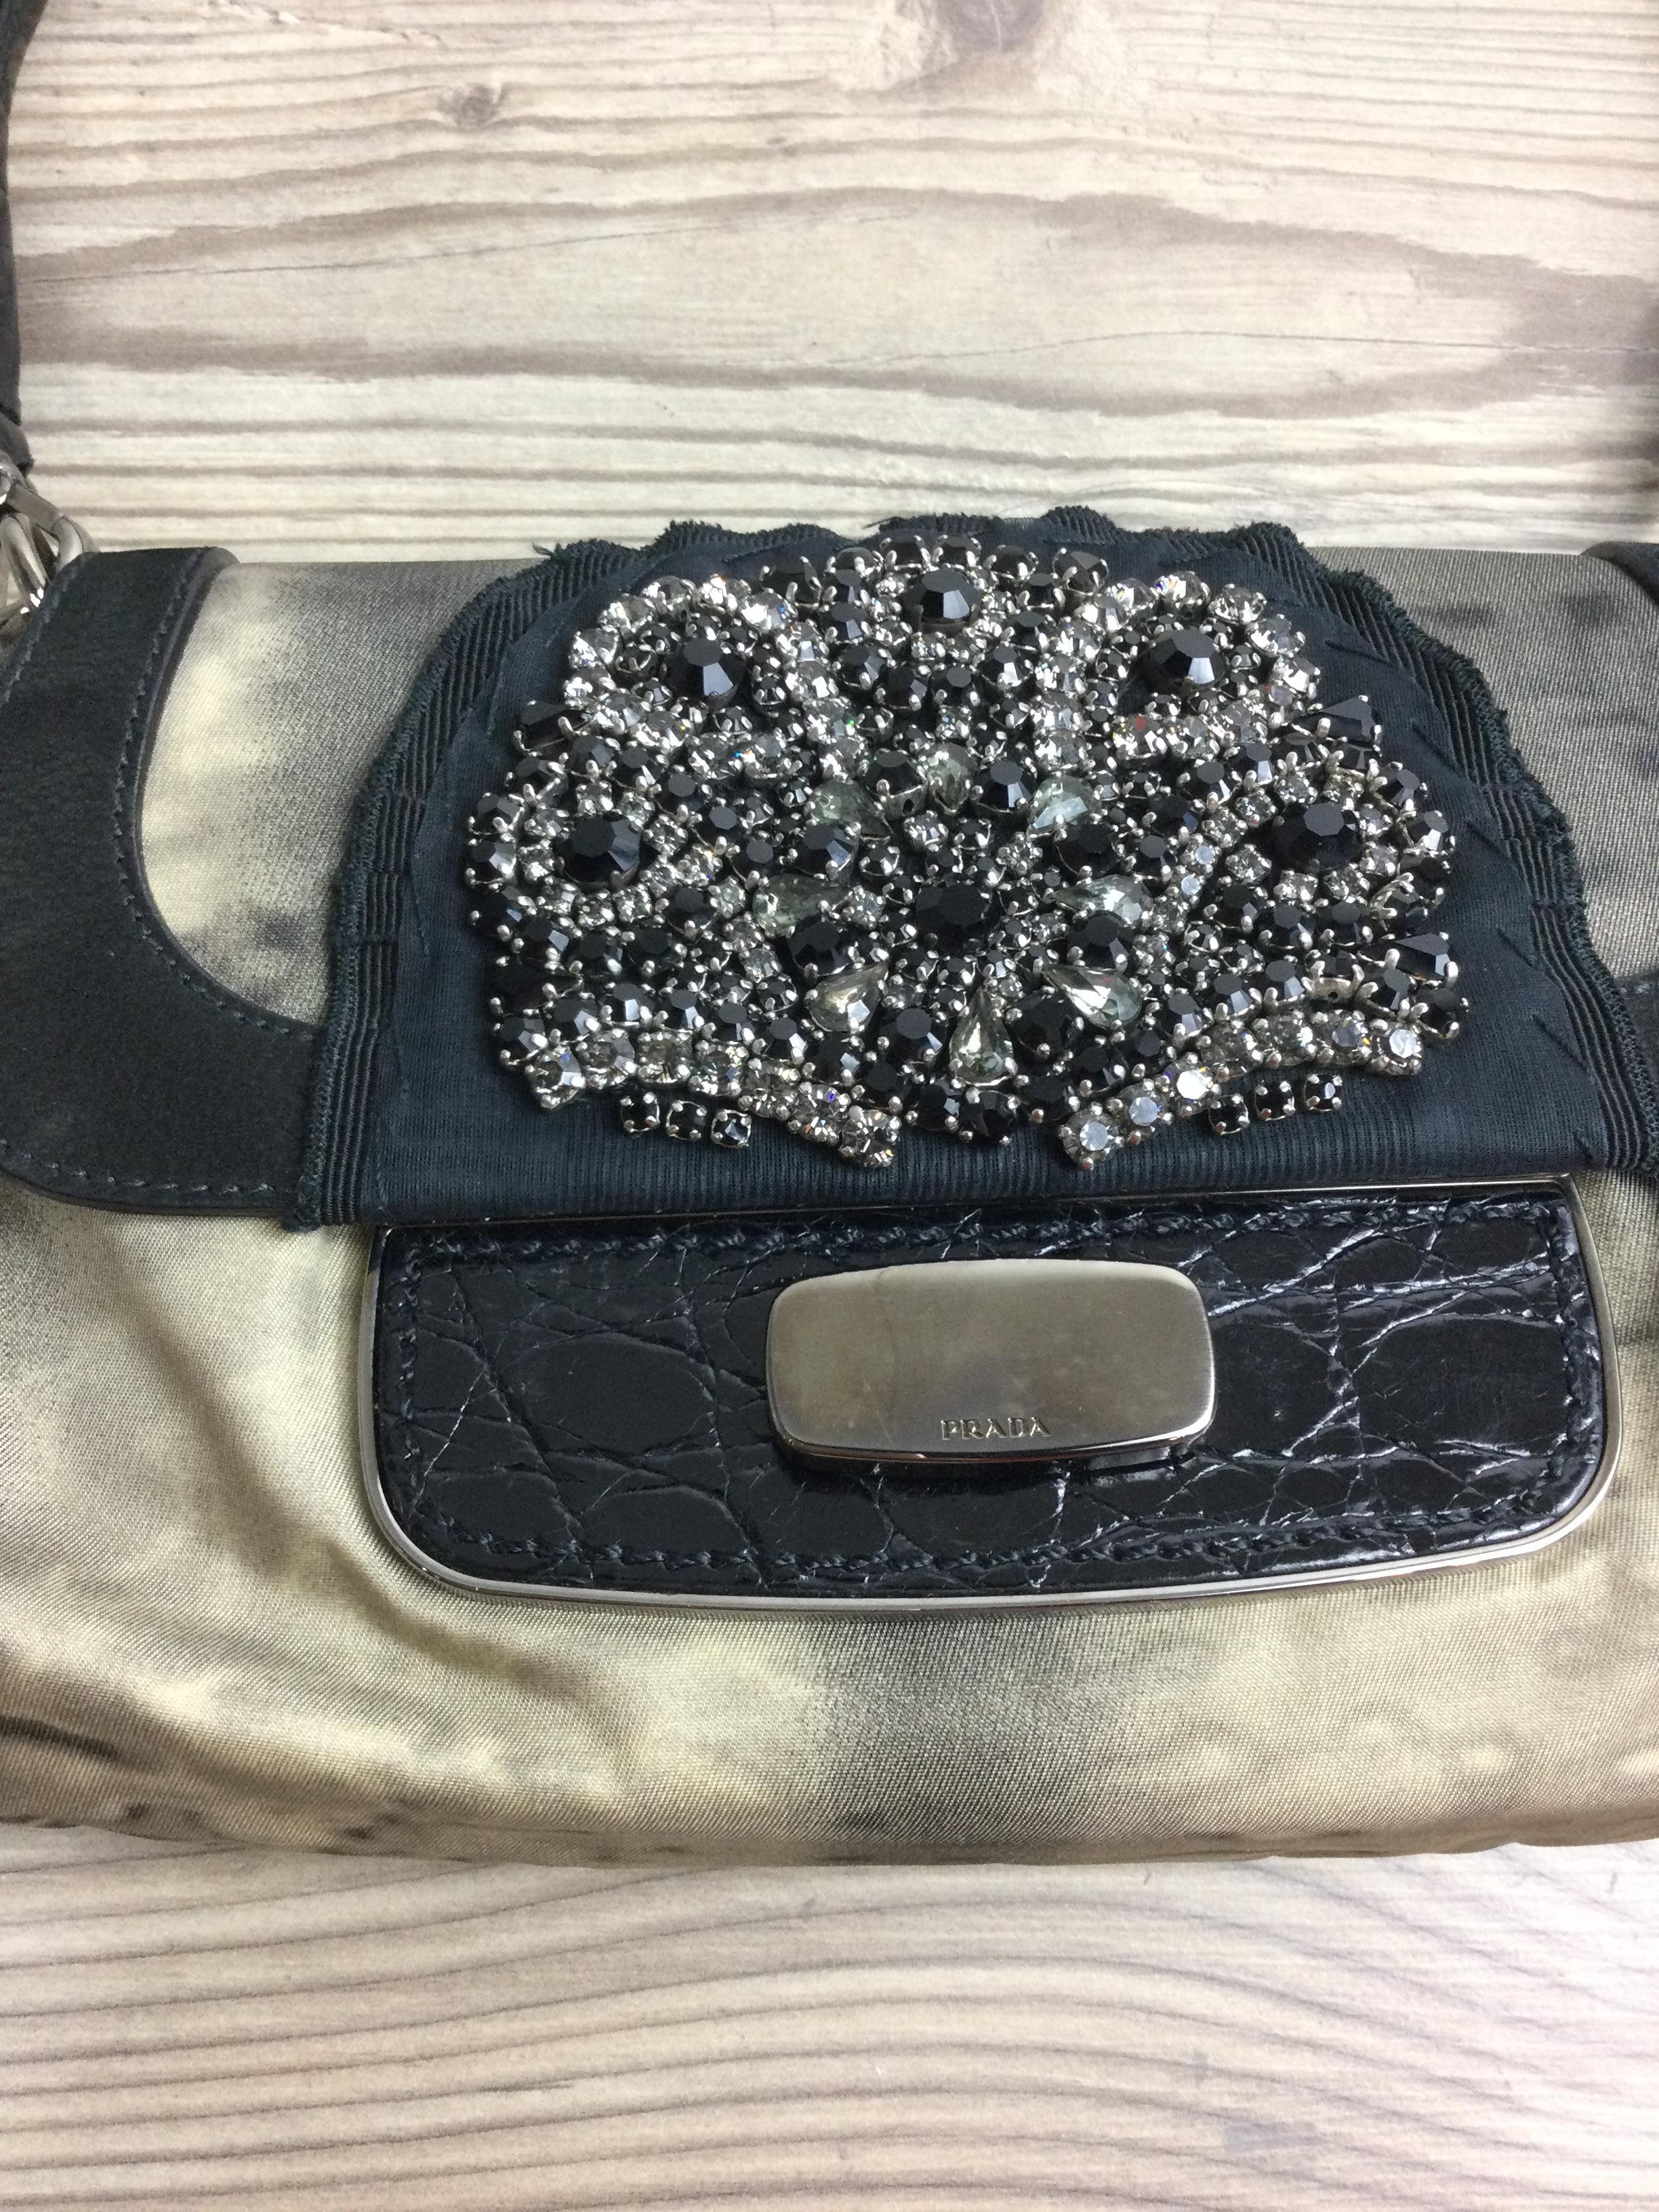 Prada elegant night jewelry bag In Good Condition For Sale In Carnate, IT